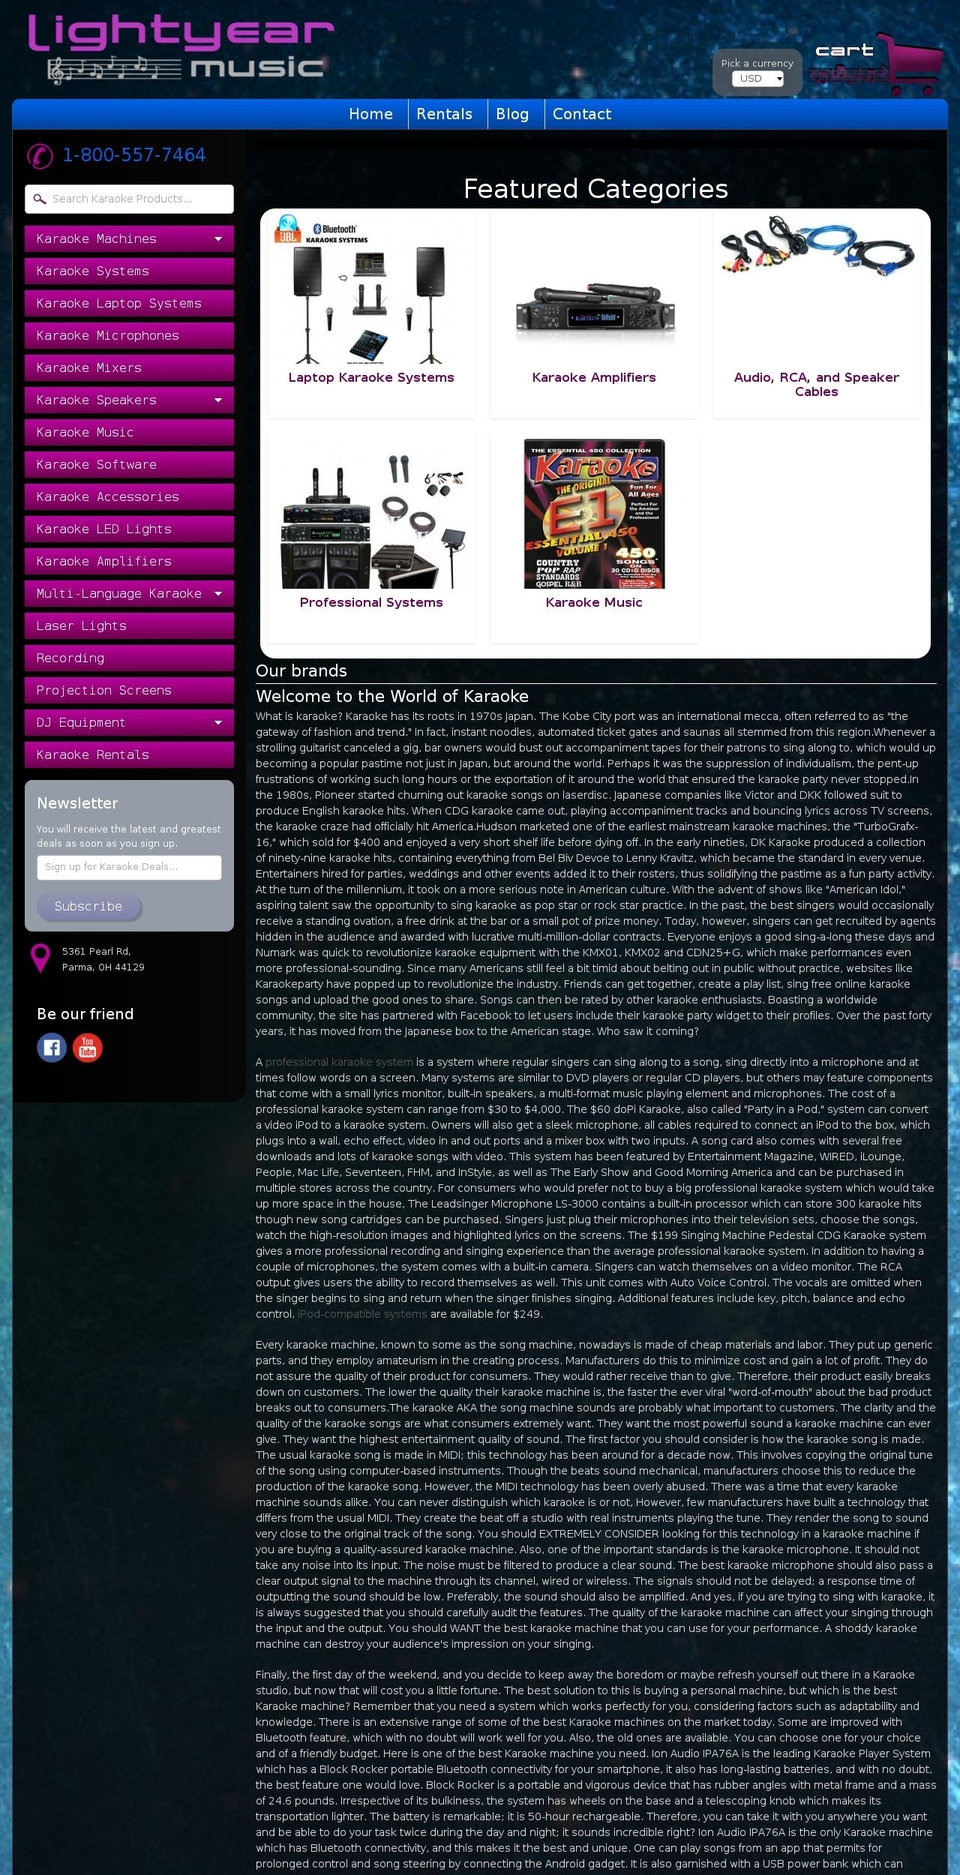 lightyearmusic.com shopify website screenshot